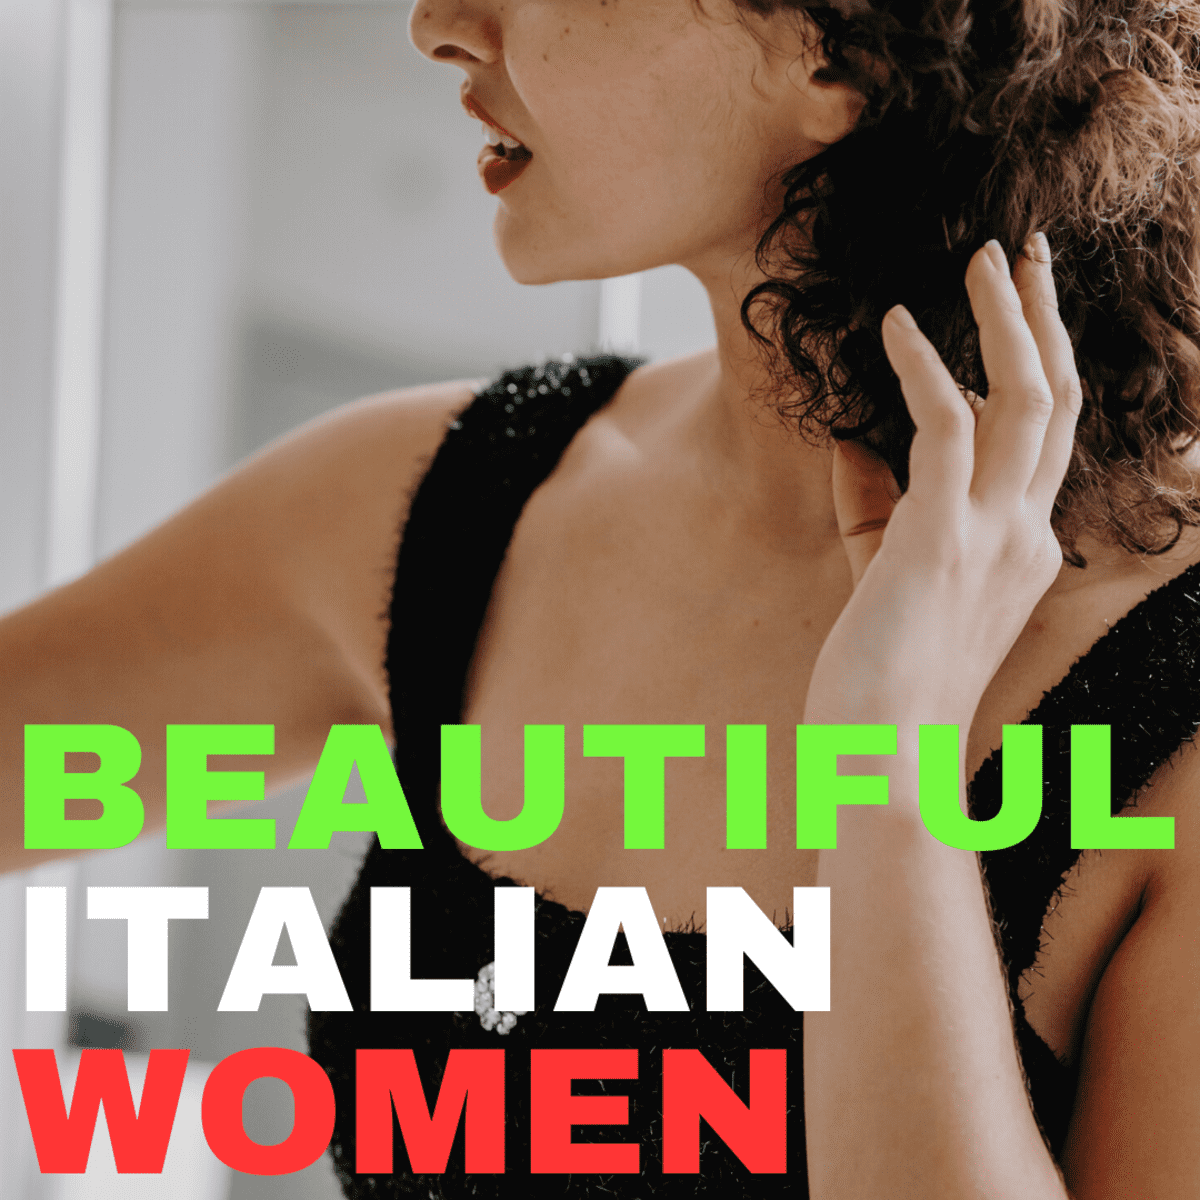 Top 10 Most Beautiful Italian Actresses image